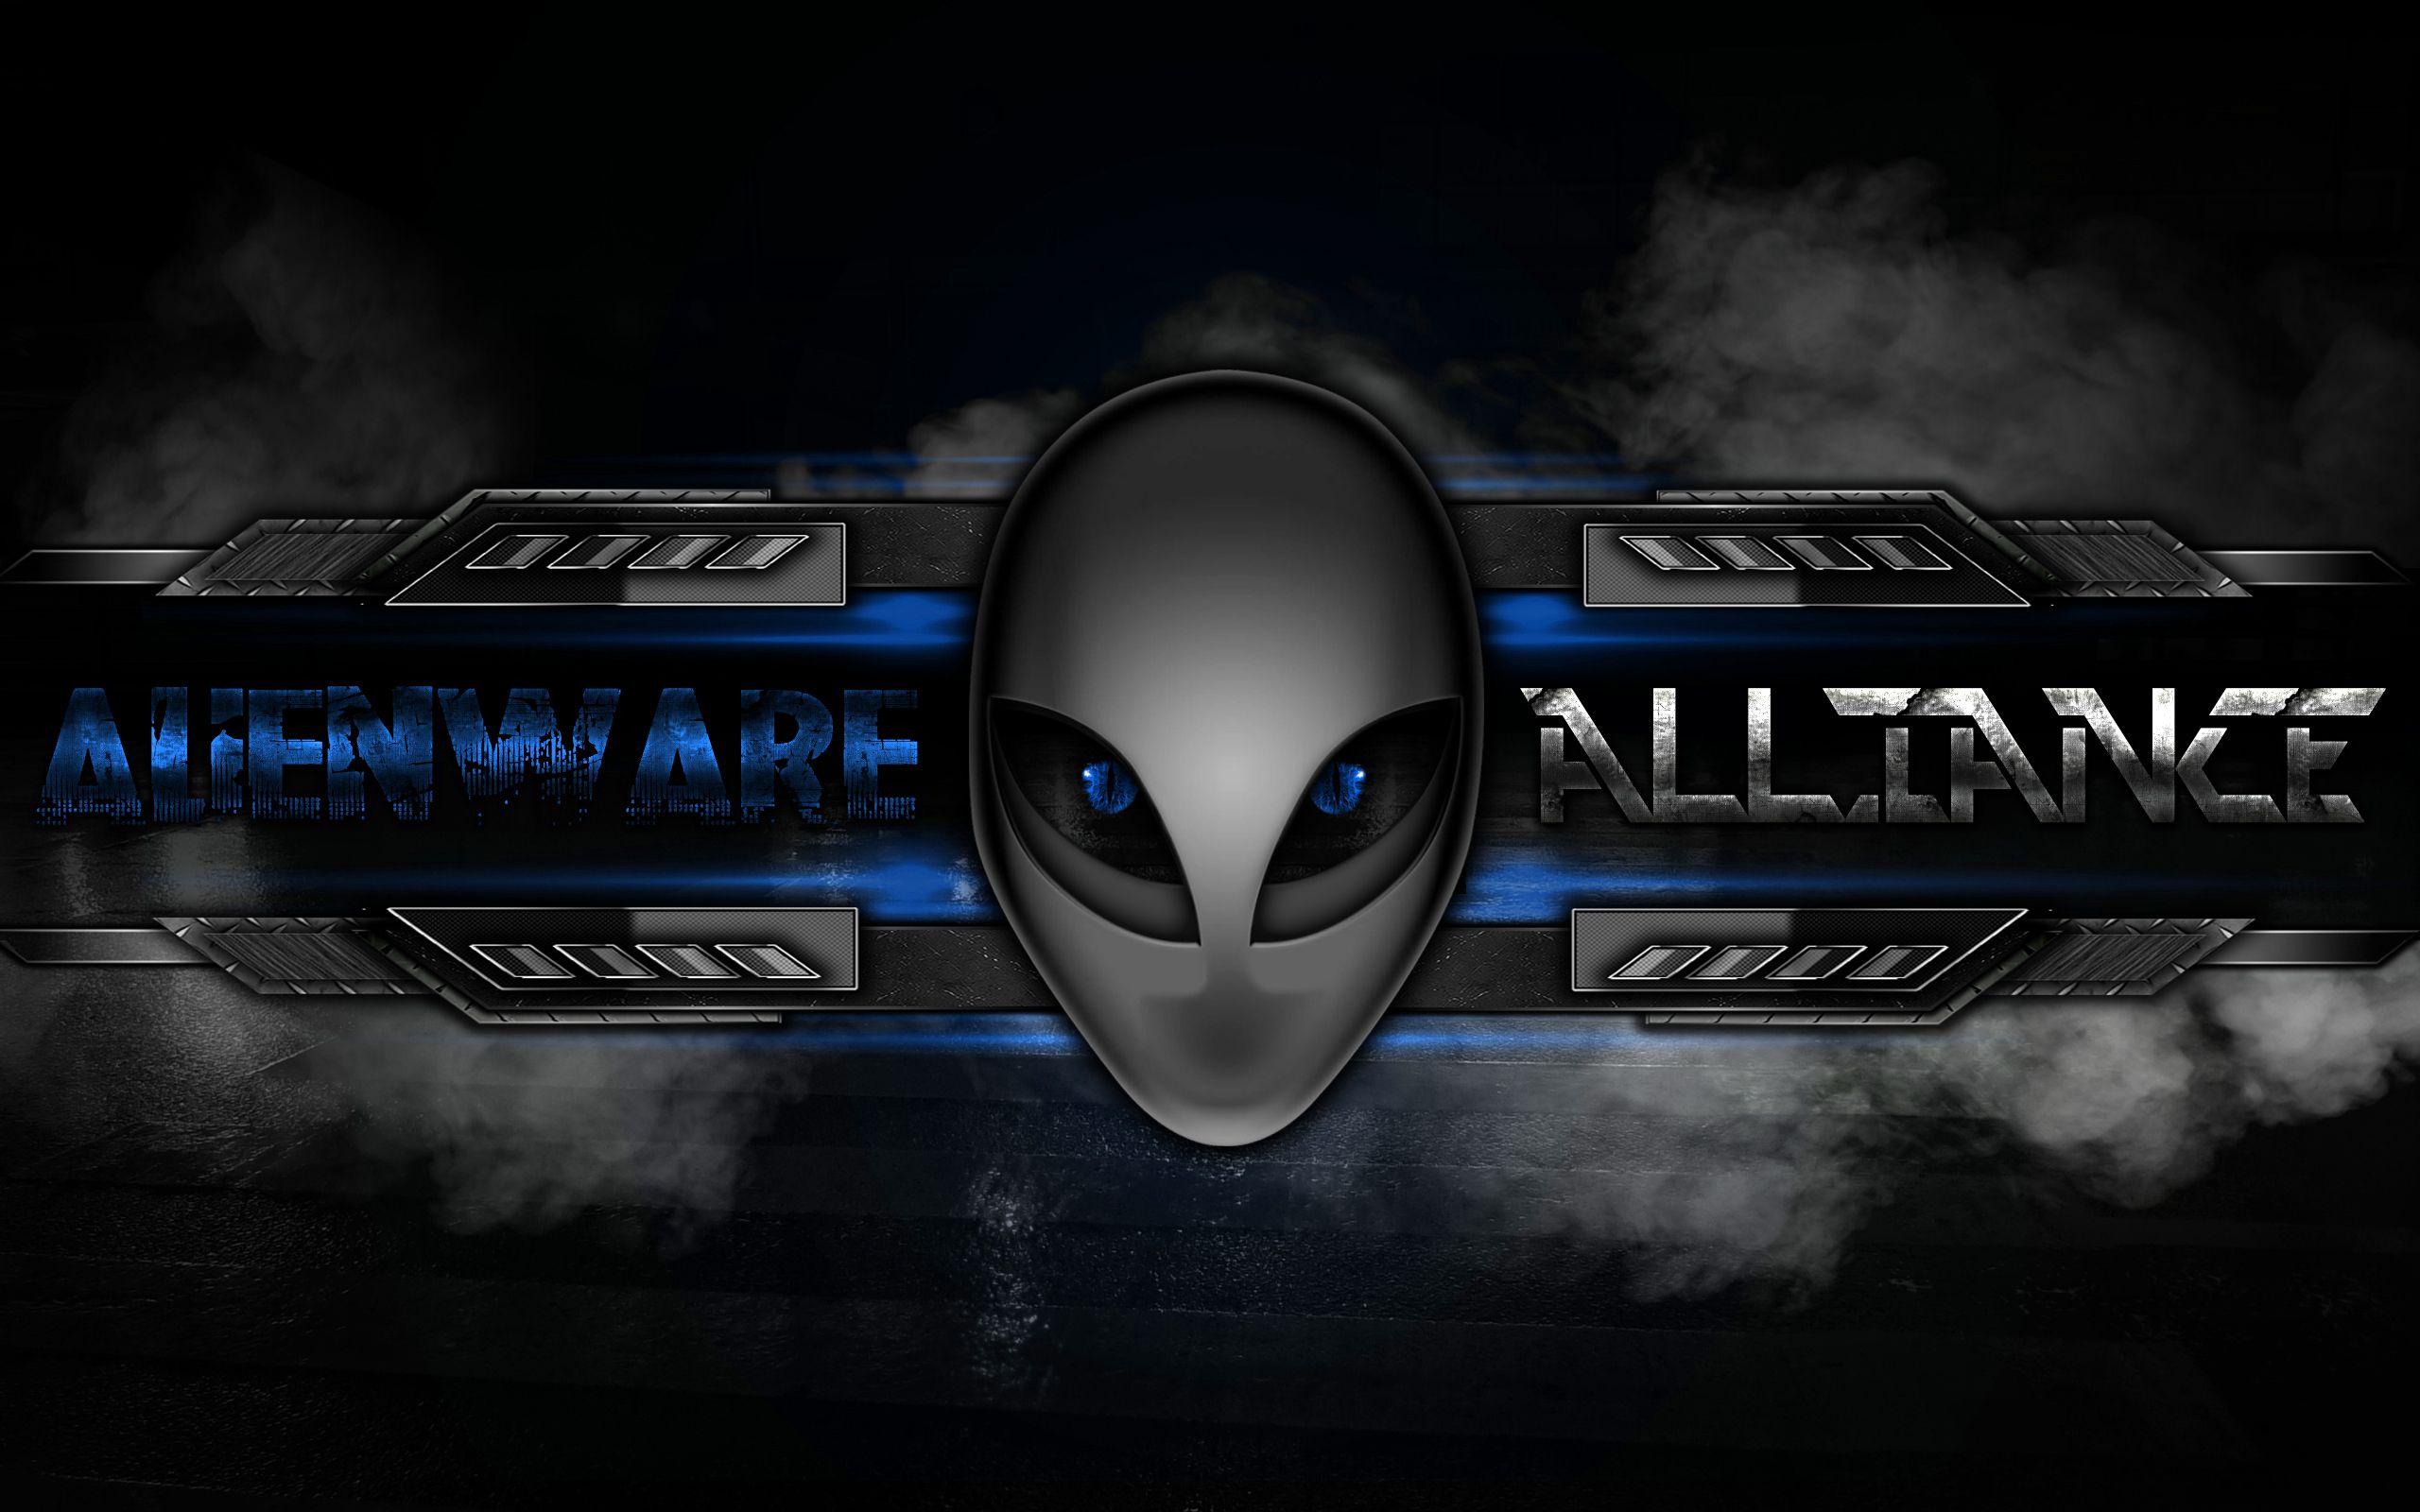 Alienware Desktop Background Fx Themes. Alienware desktop, Alienware, Desktop themes